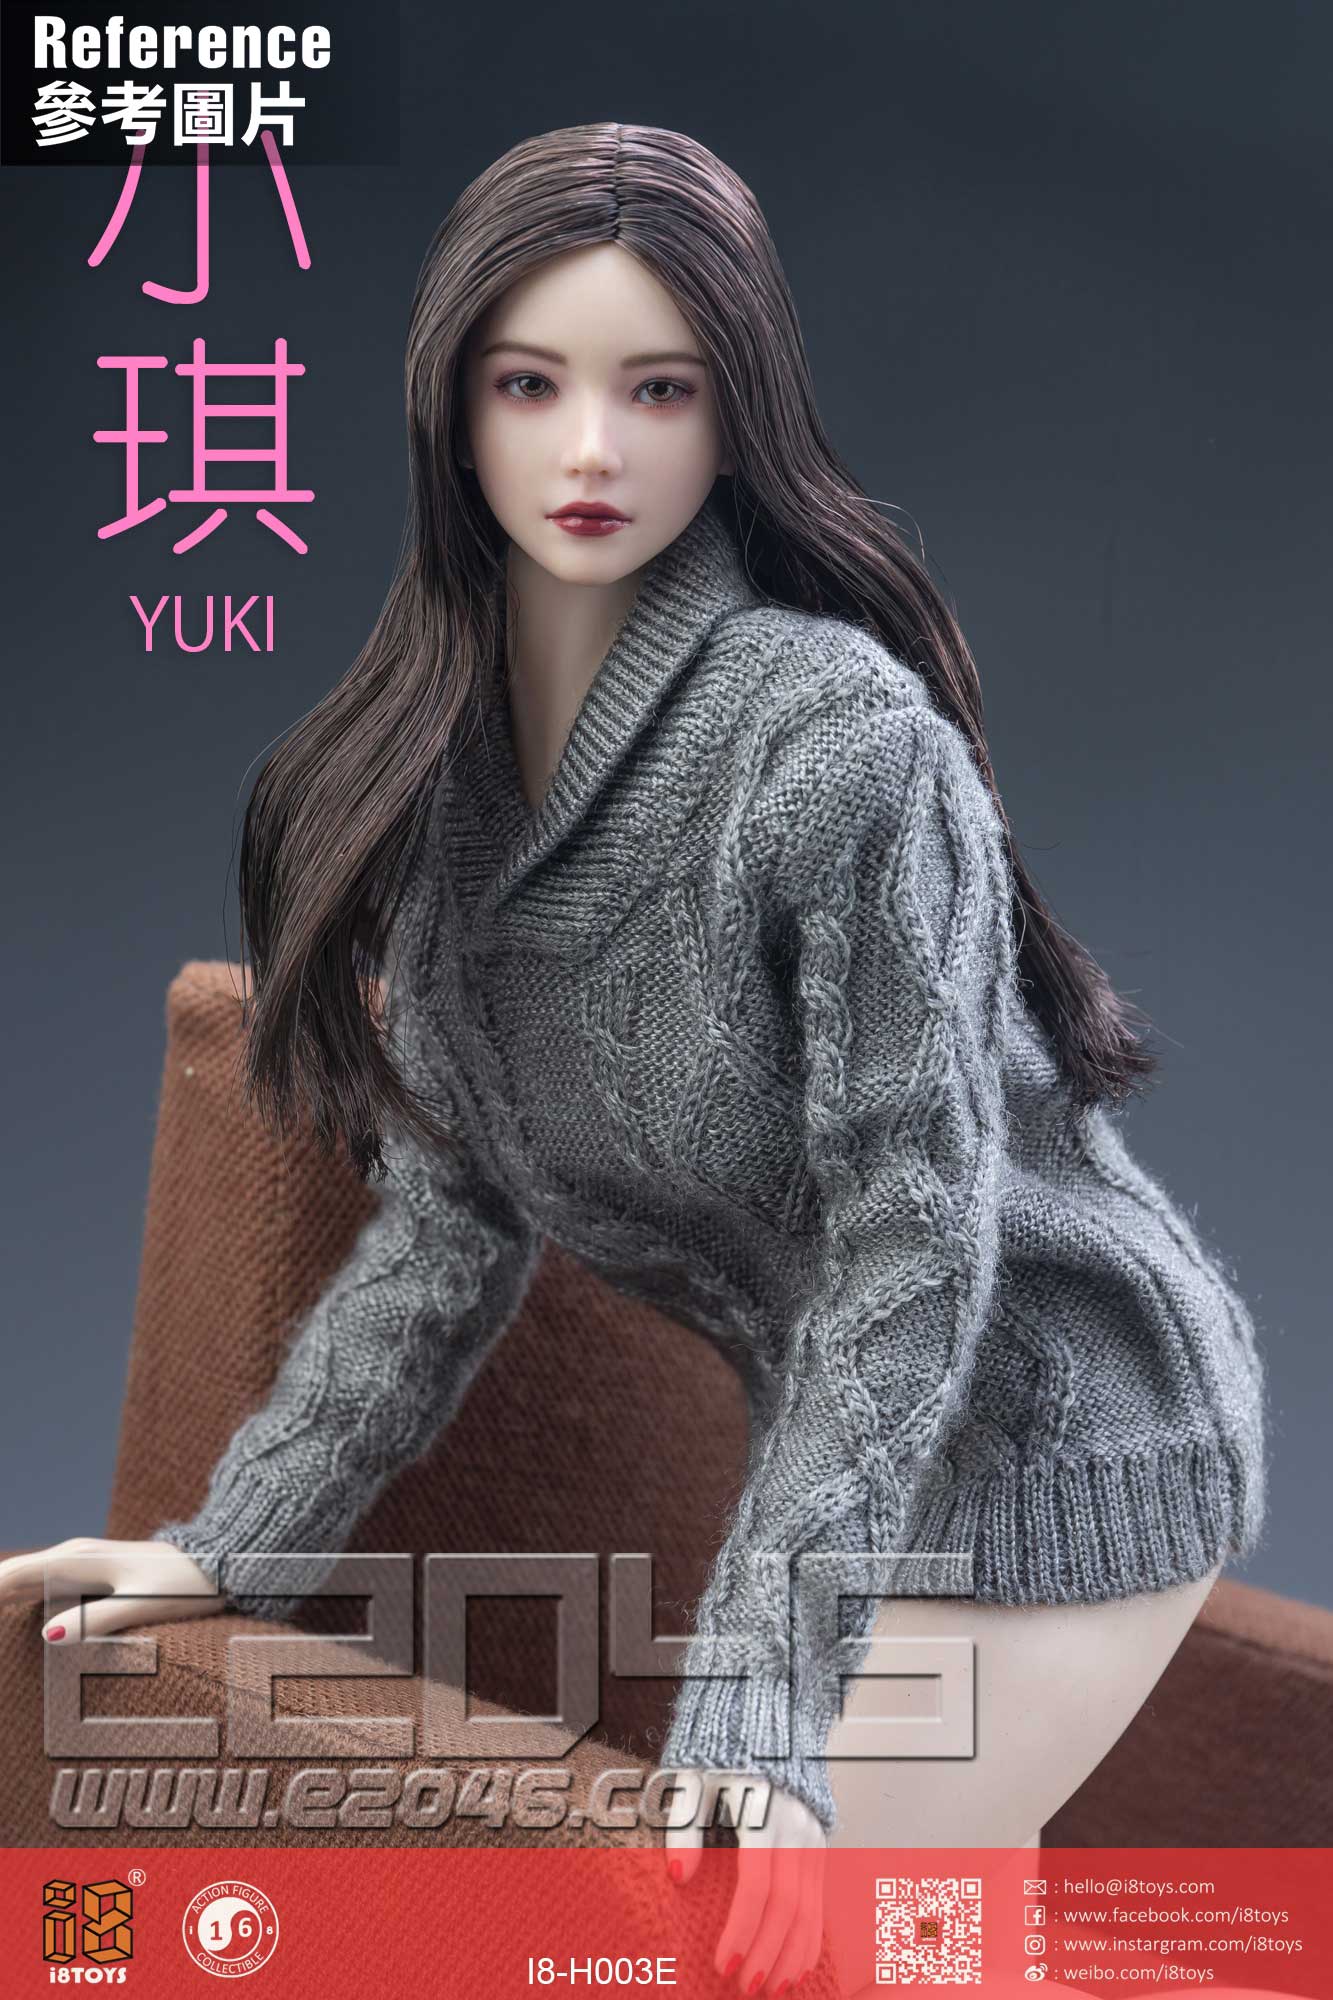 Yuki E (DOLL)